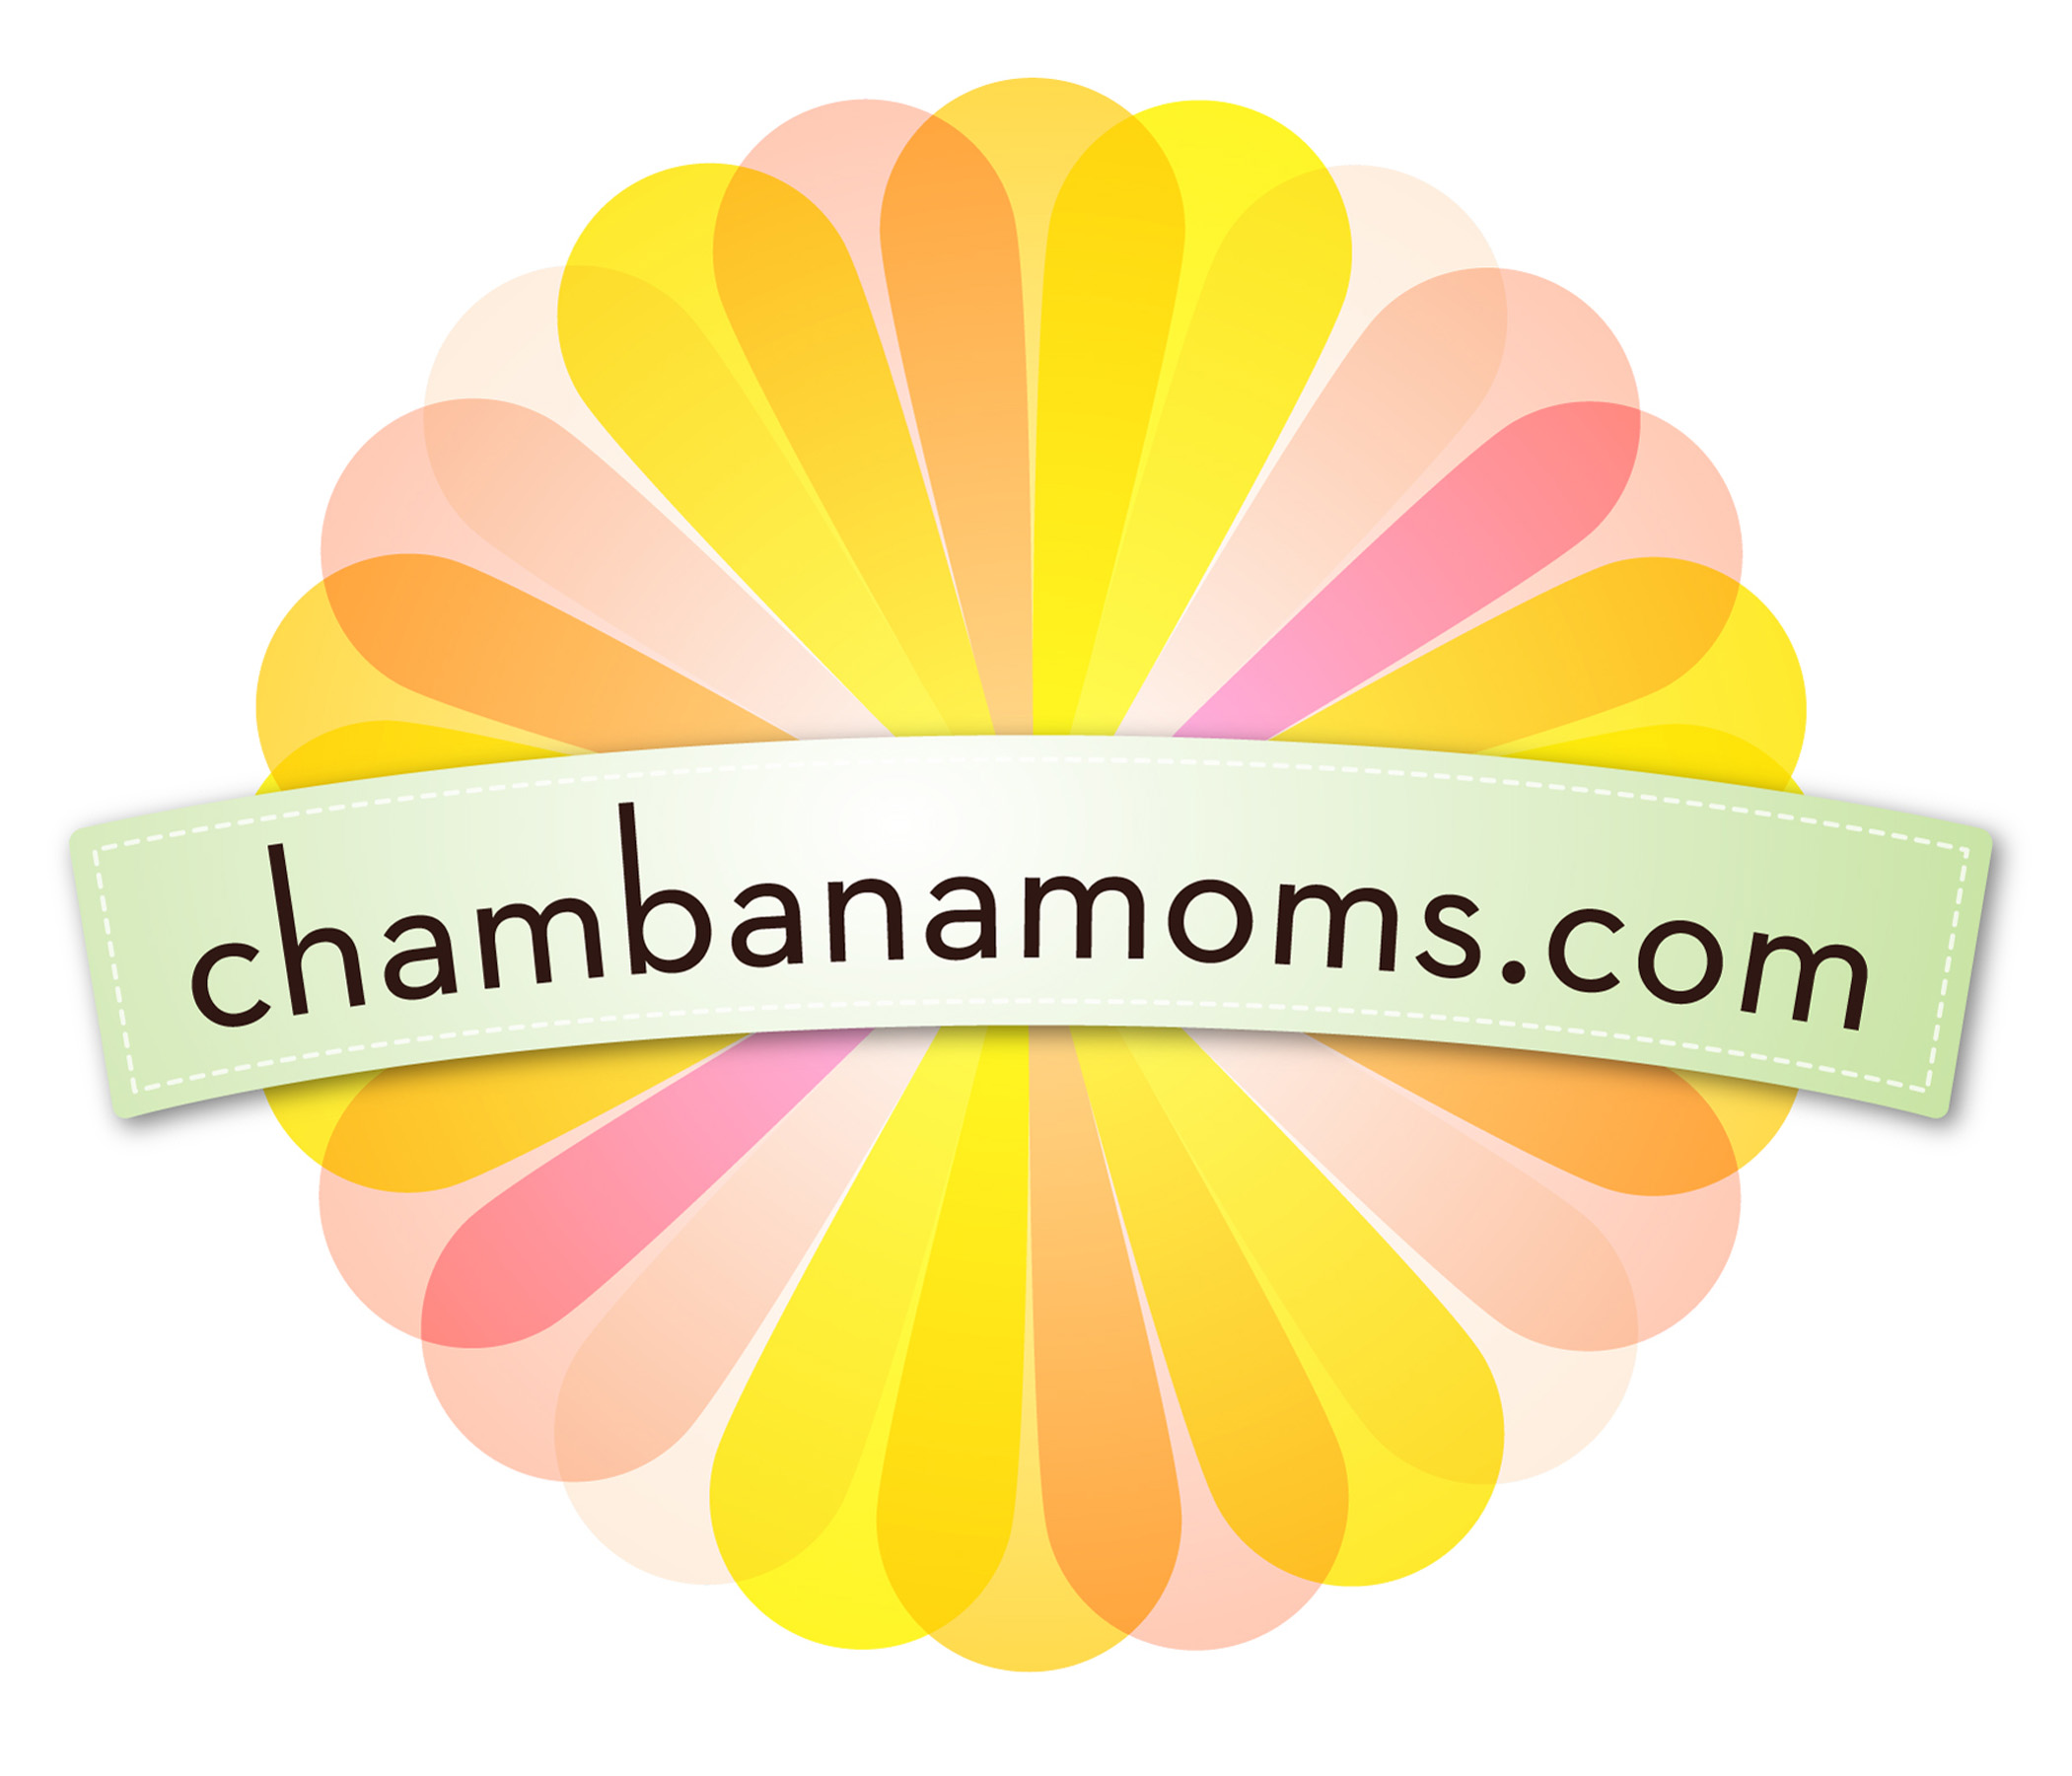 chambanamoms.com